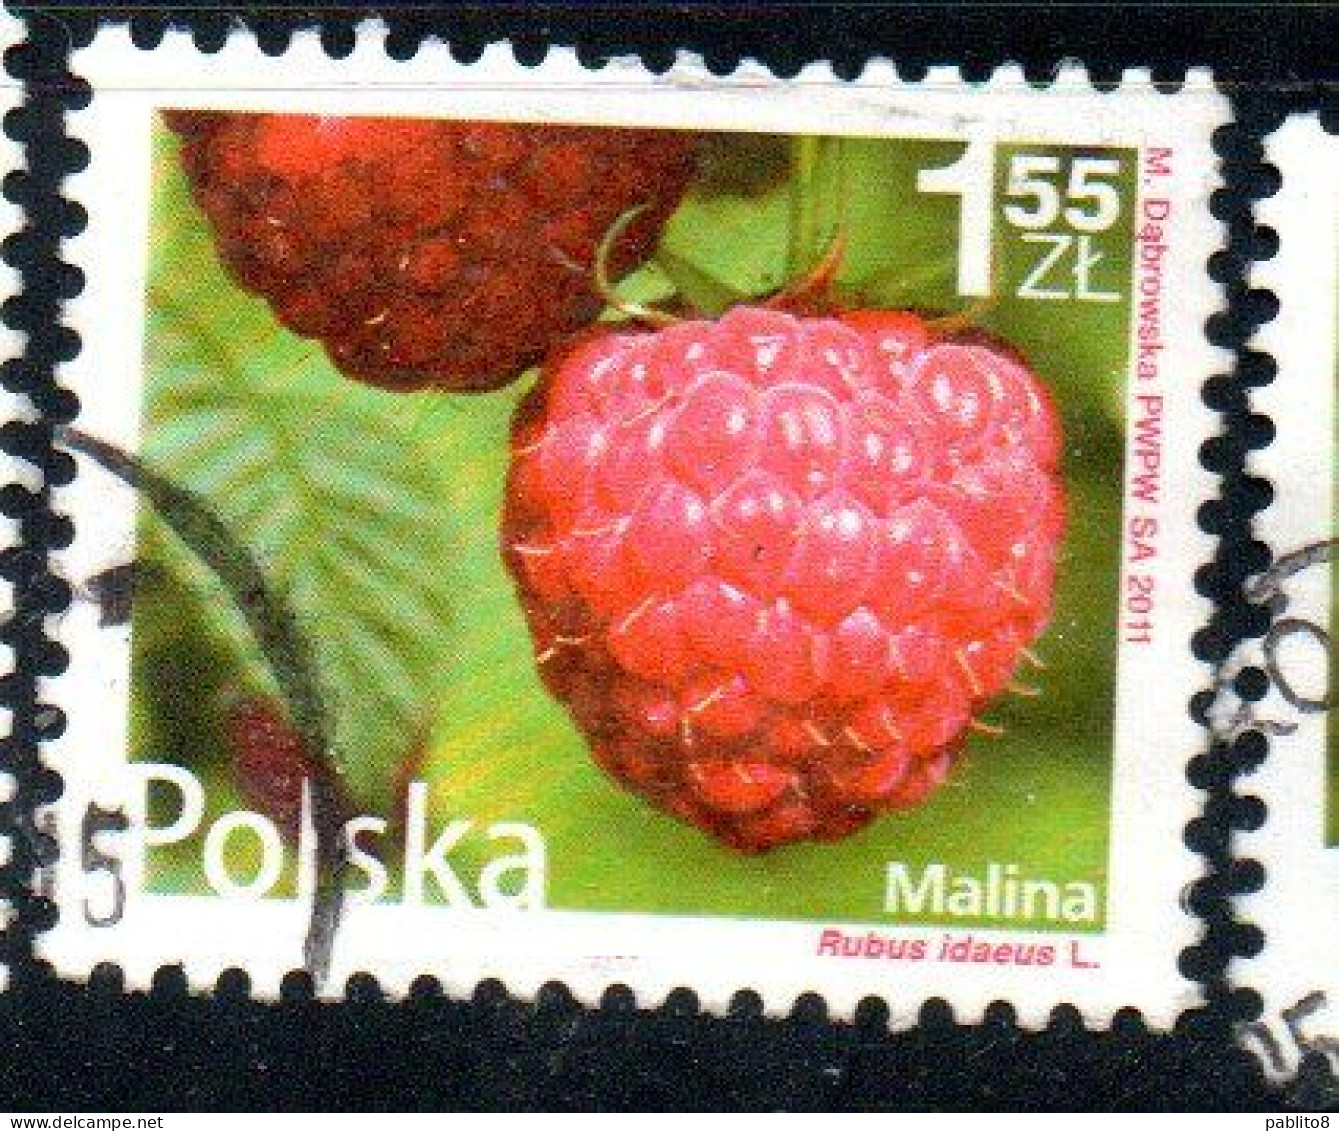 POLONIA POLAND POLSKA 2011 FRUIT AND FLOWERS RUBUS IDAEUS 1.55z USED USATO OBLITERE' - Used Stamps